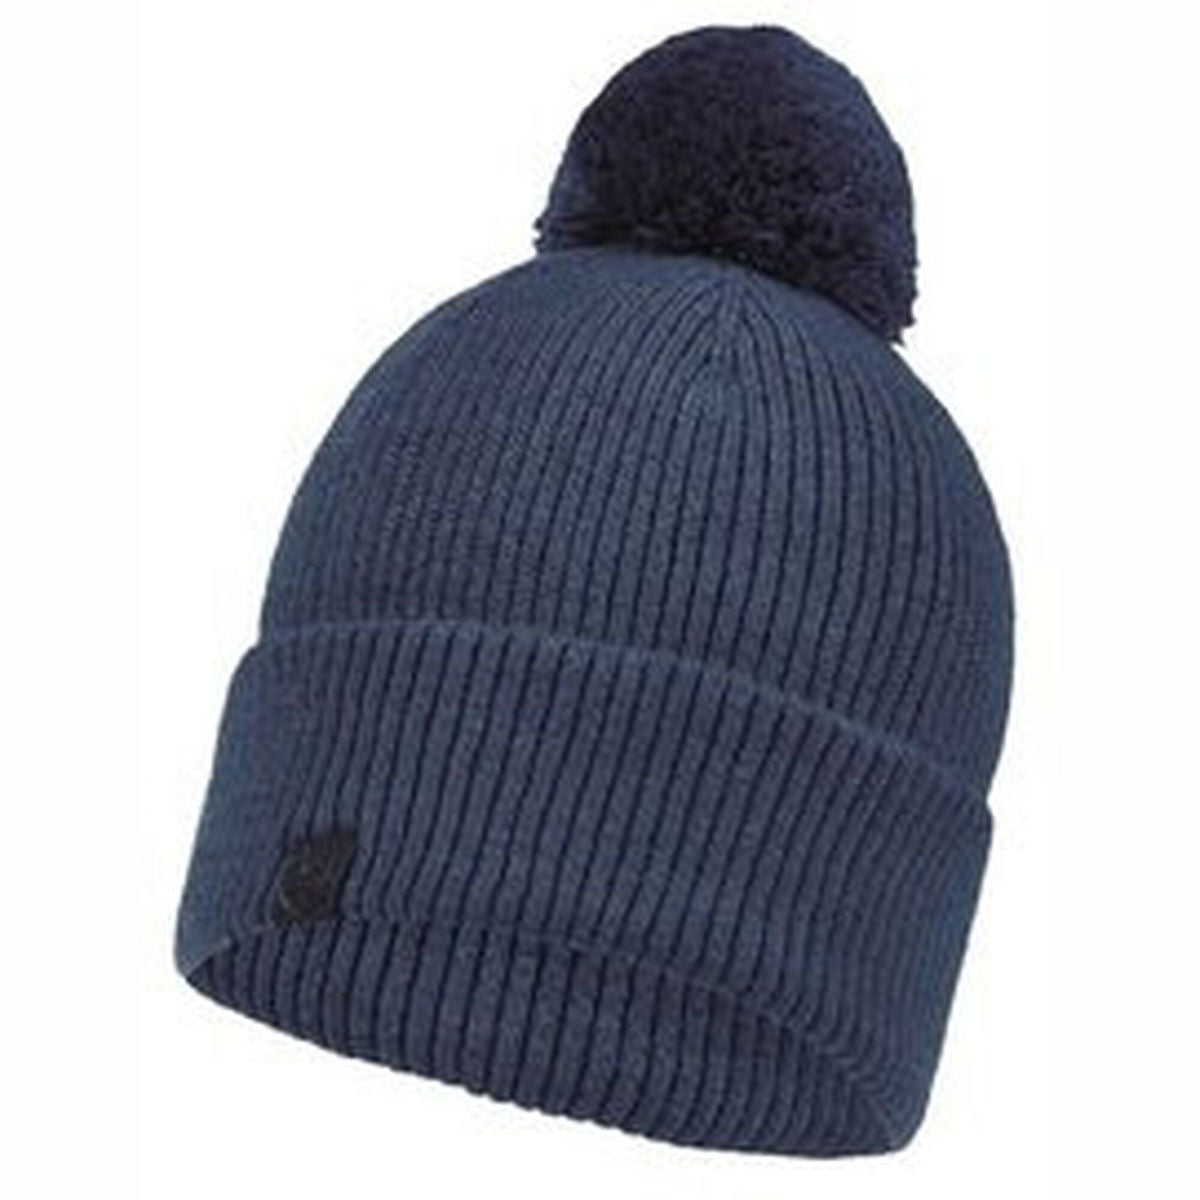 BUFF® Knitted Hat TIM DENIM - Muts